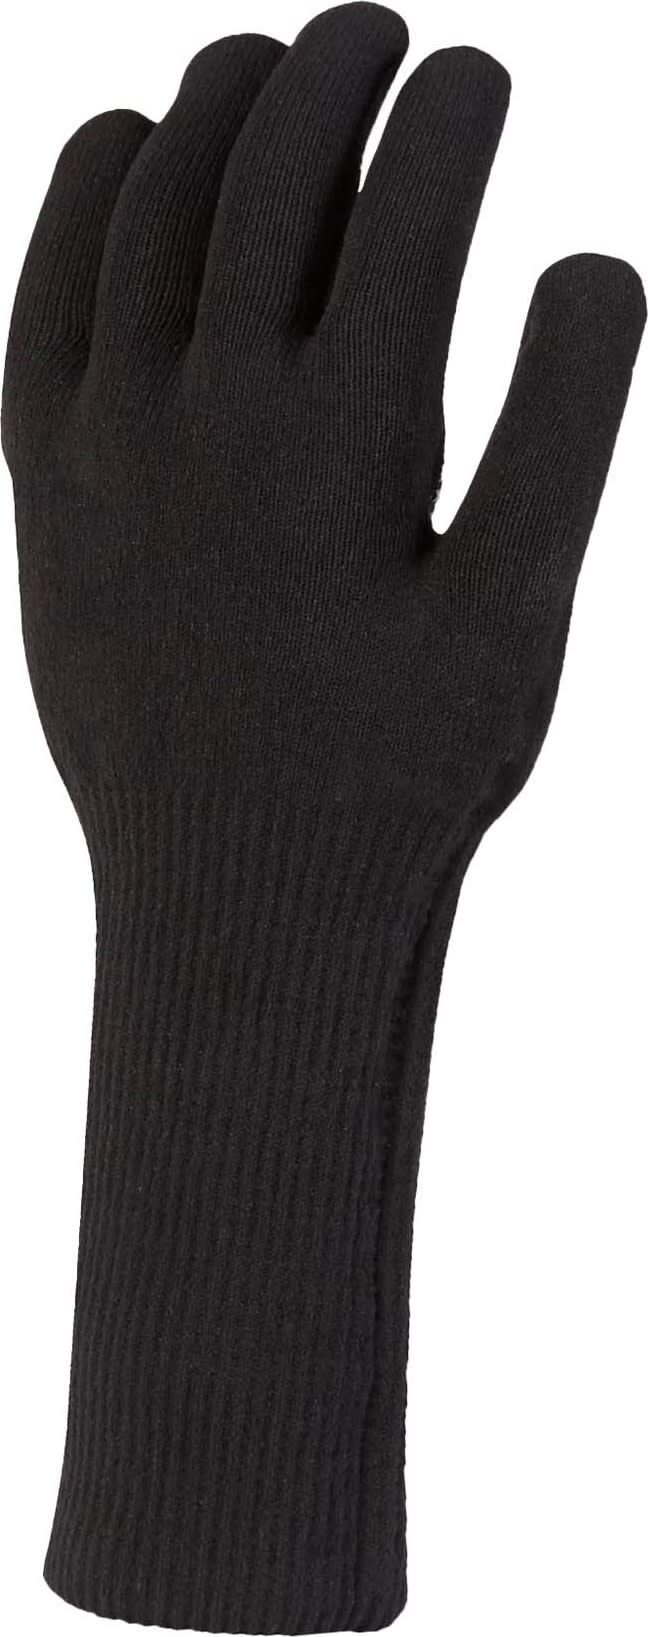 Sealskinz Waterproof All Weather Ultra Grip Knitted Gauntlet Black